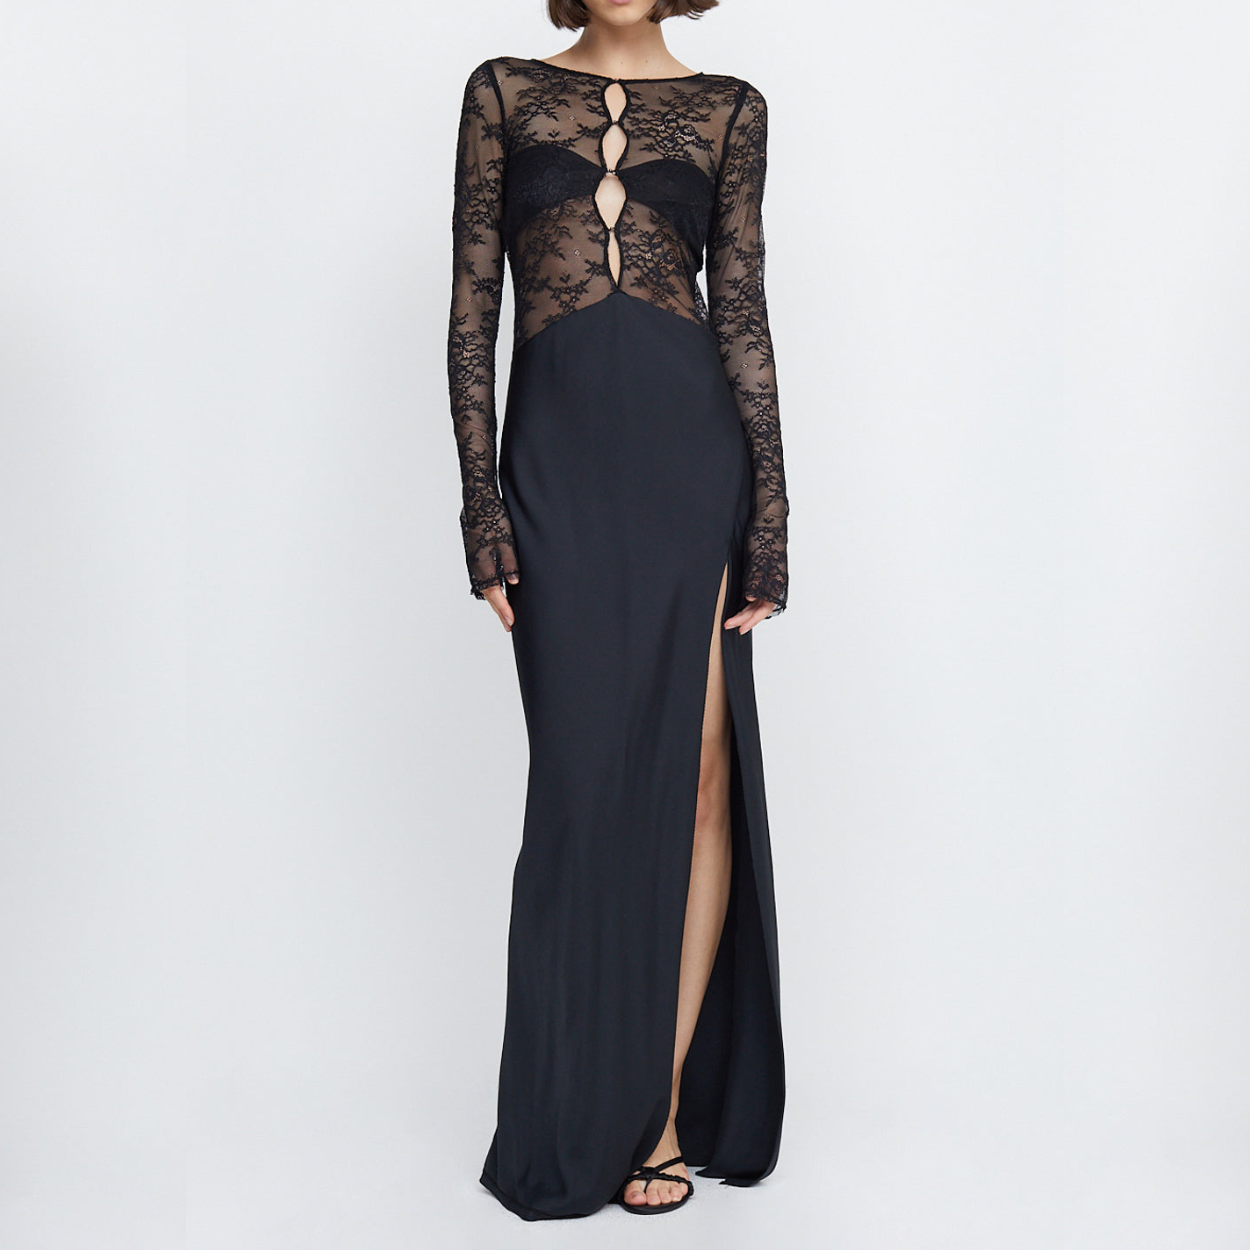 Black Lace Bodice Long Sleeves Dress